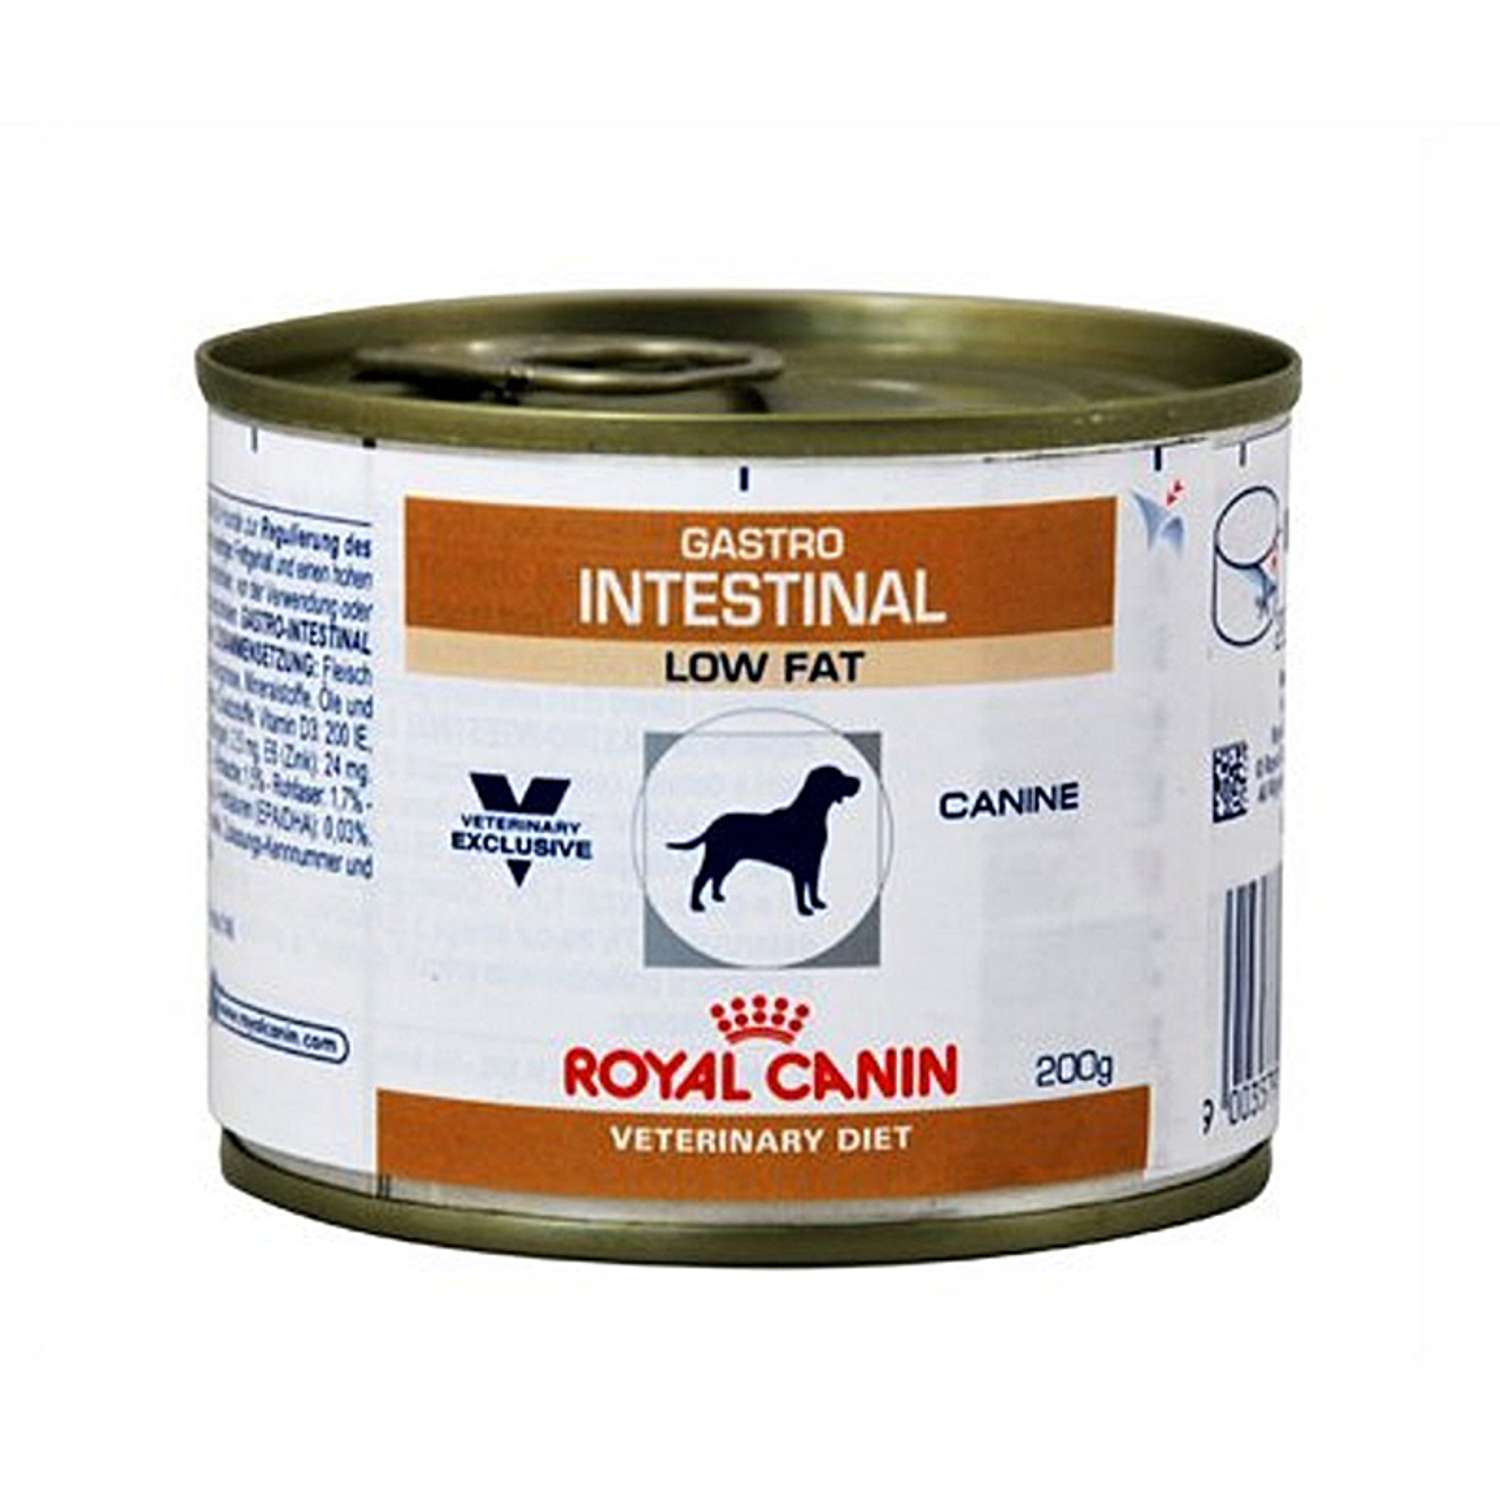 Royal Canin Gastrointestinal Low fat (паштет). Гастро Интестинал Low fat для собак. Royal Canin Gastrointestinal для собак Low fat. РК для собак гастро-Интестинал Лоу фэт смол дог (Канин) 1кг 14630100r0. Гастро купить для собак влажный корм интестинал